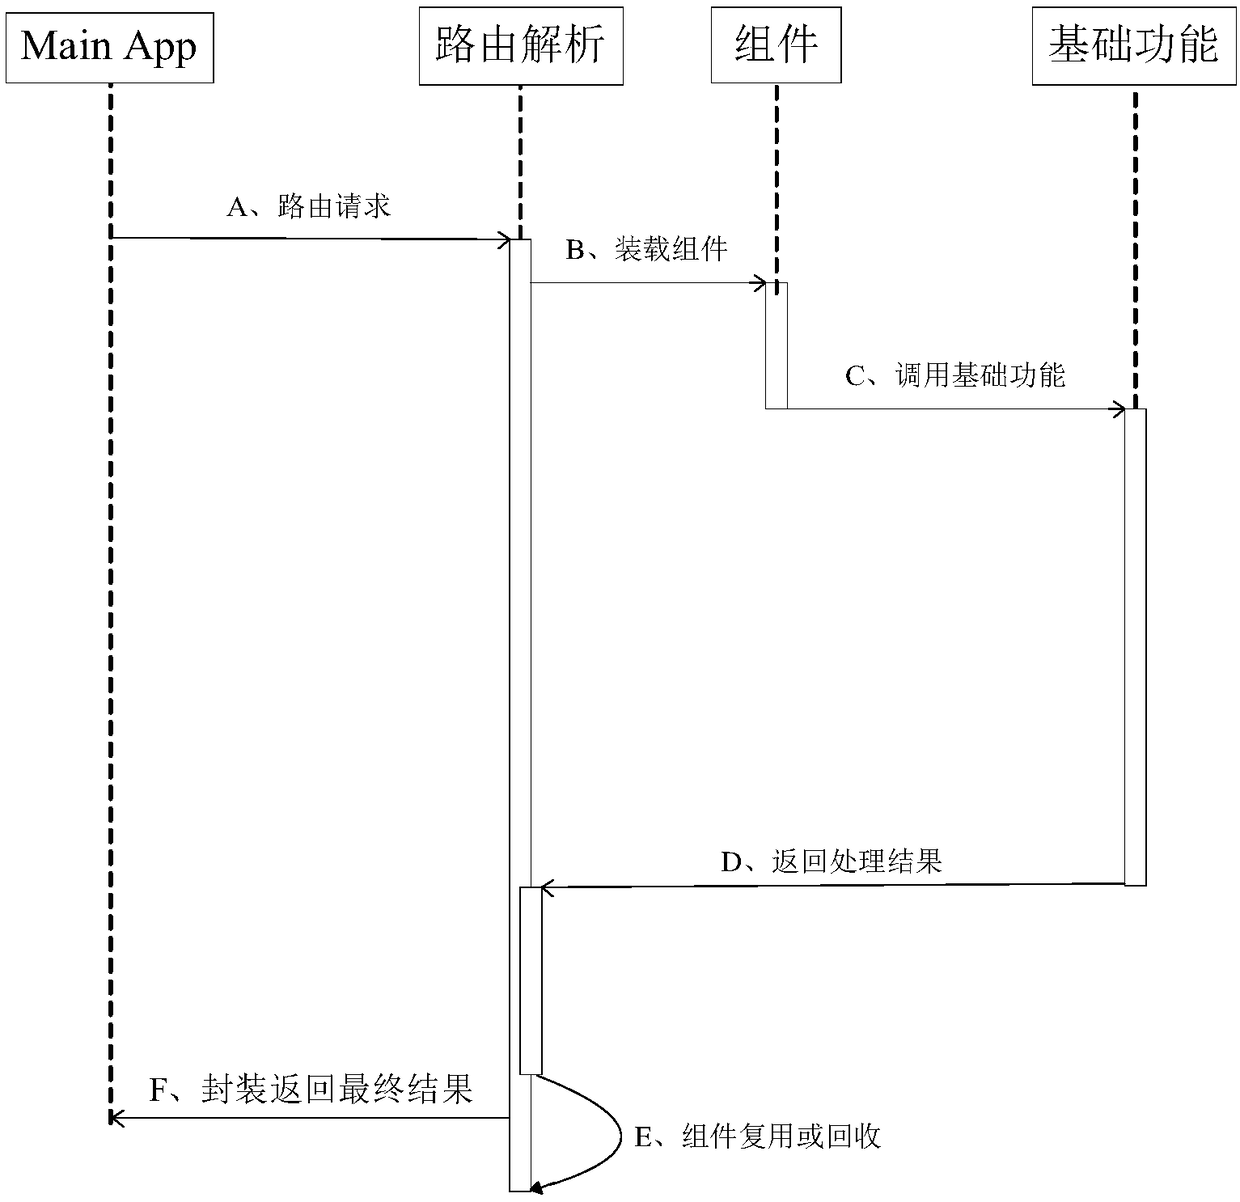 Android application component quick development method through route configuration